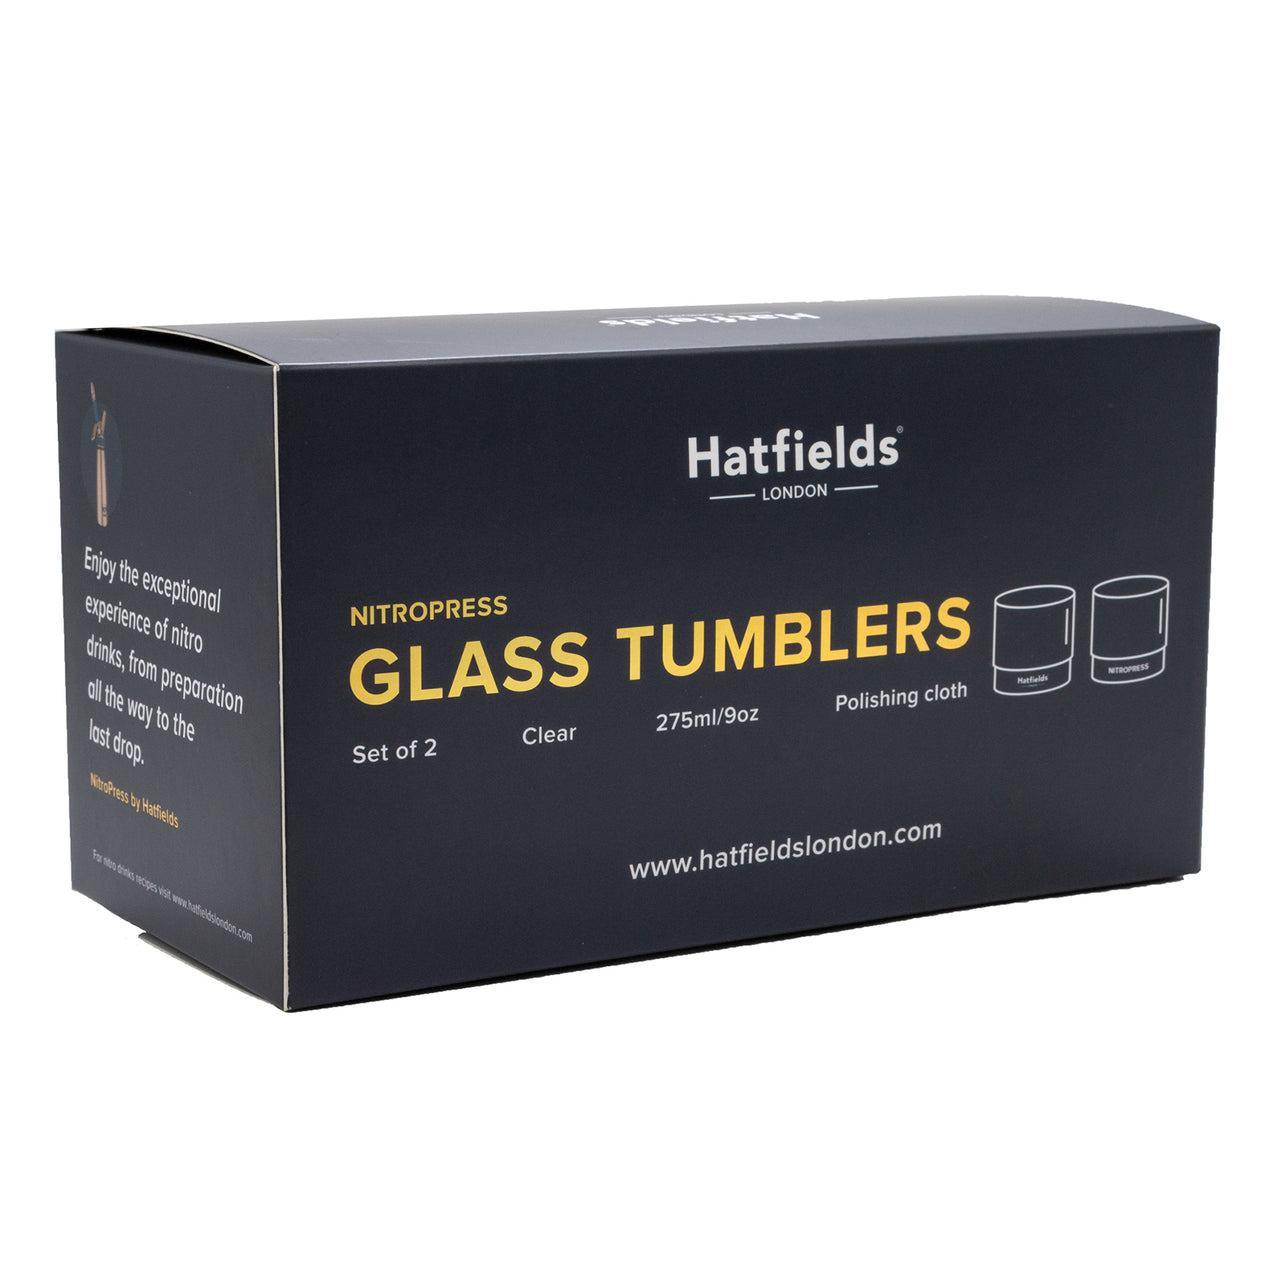 NitroPress glass tumblers product image